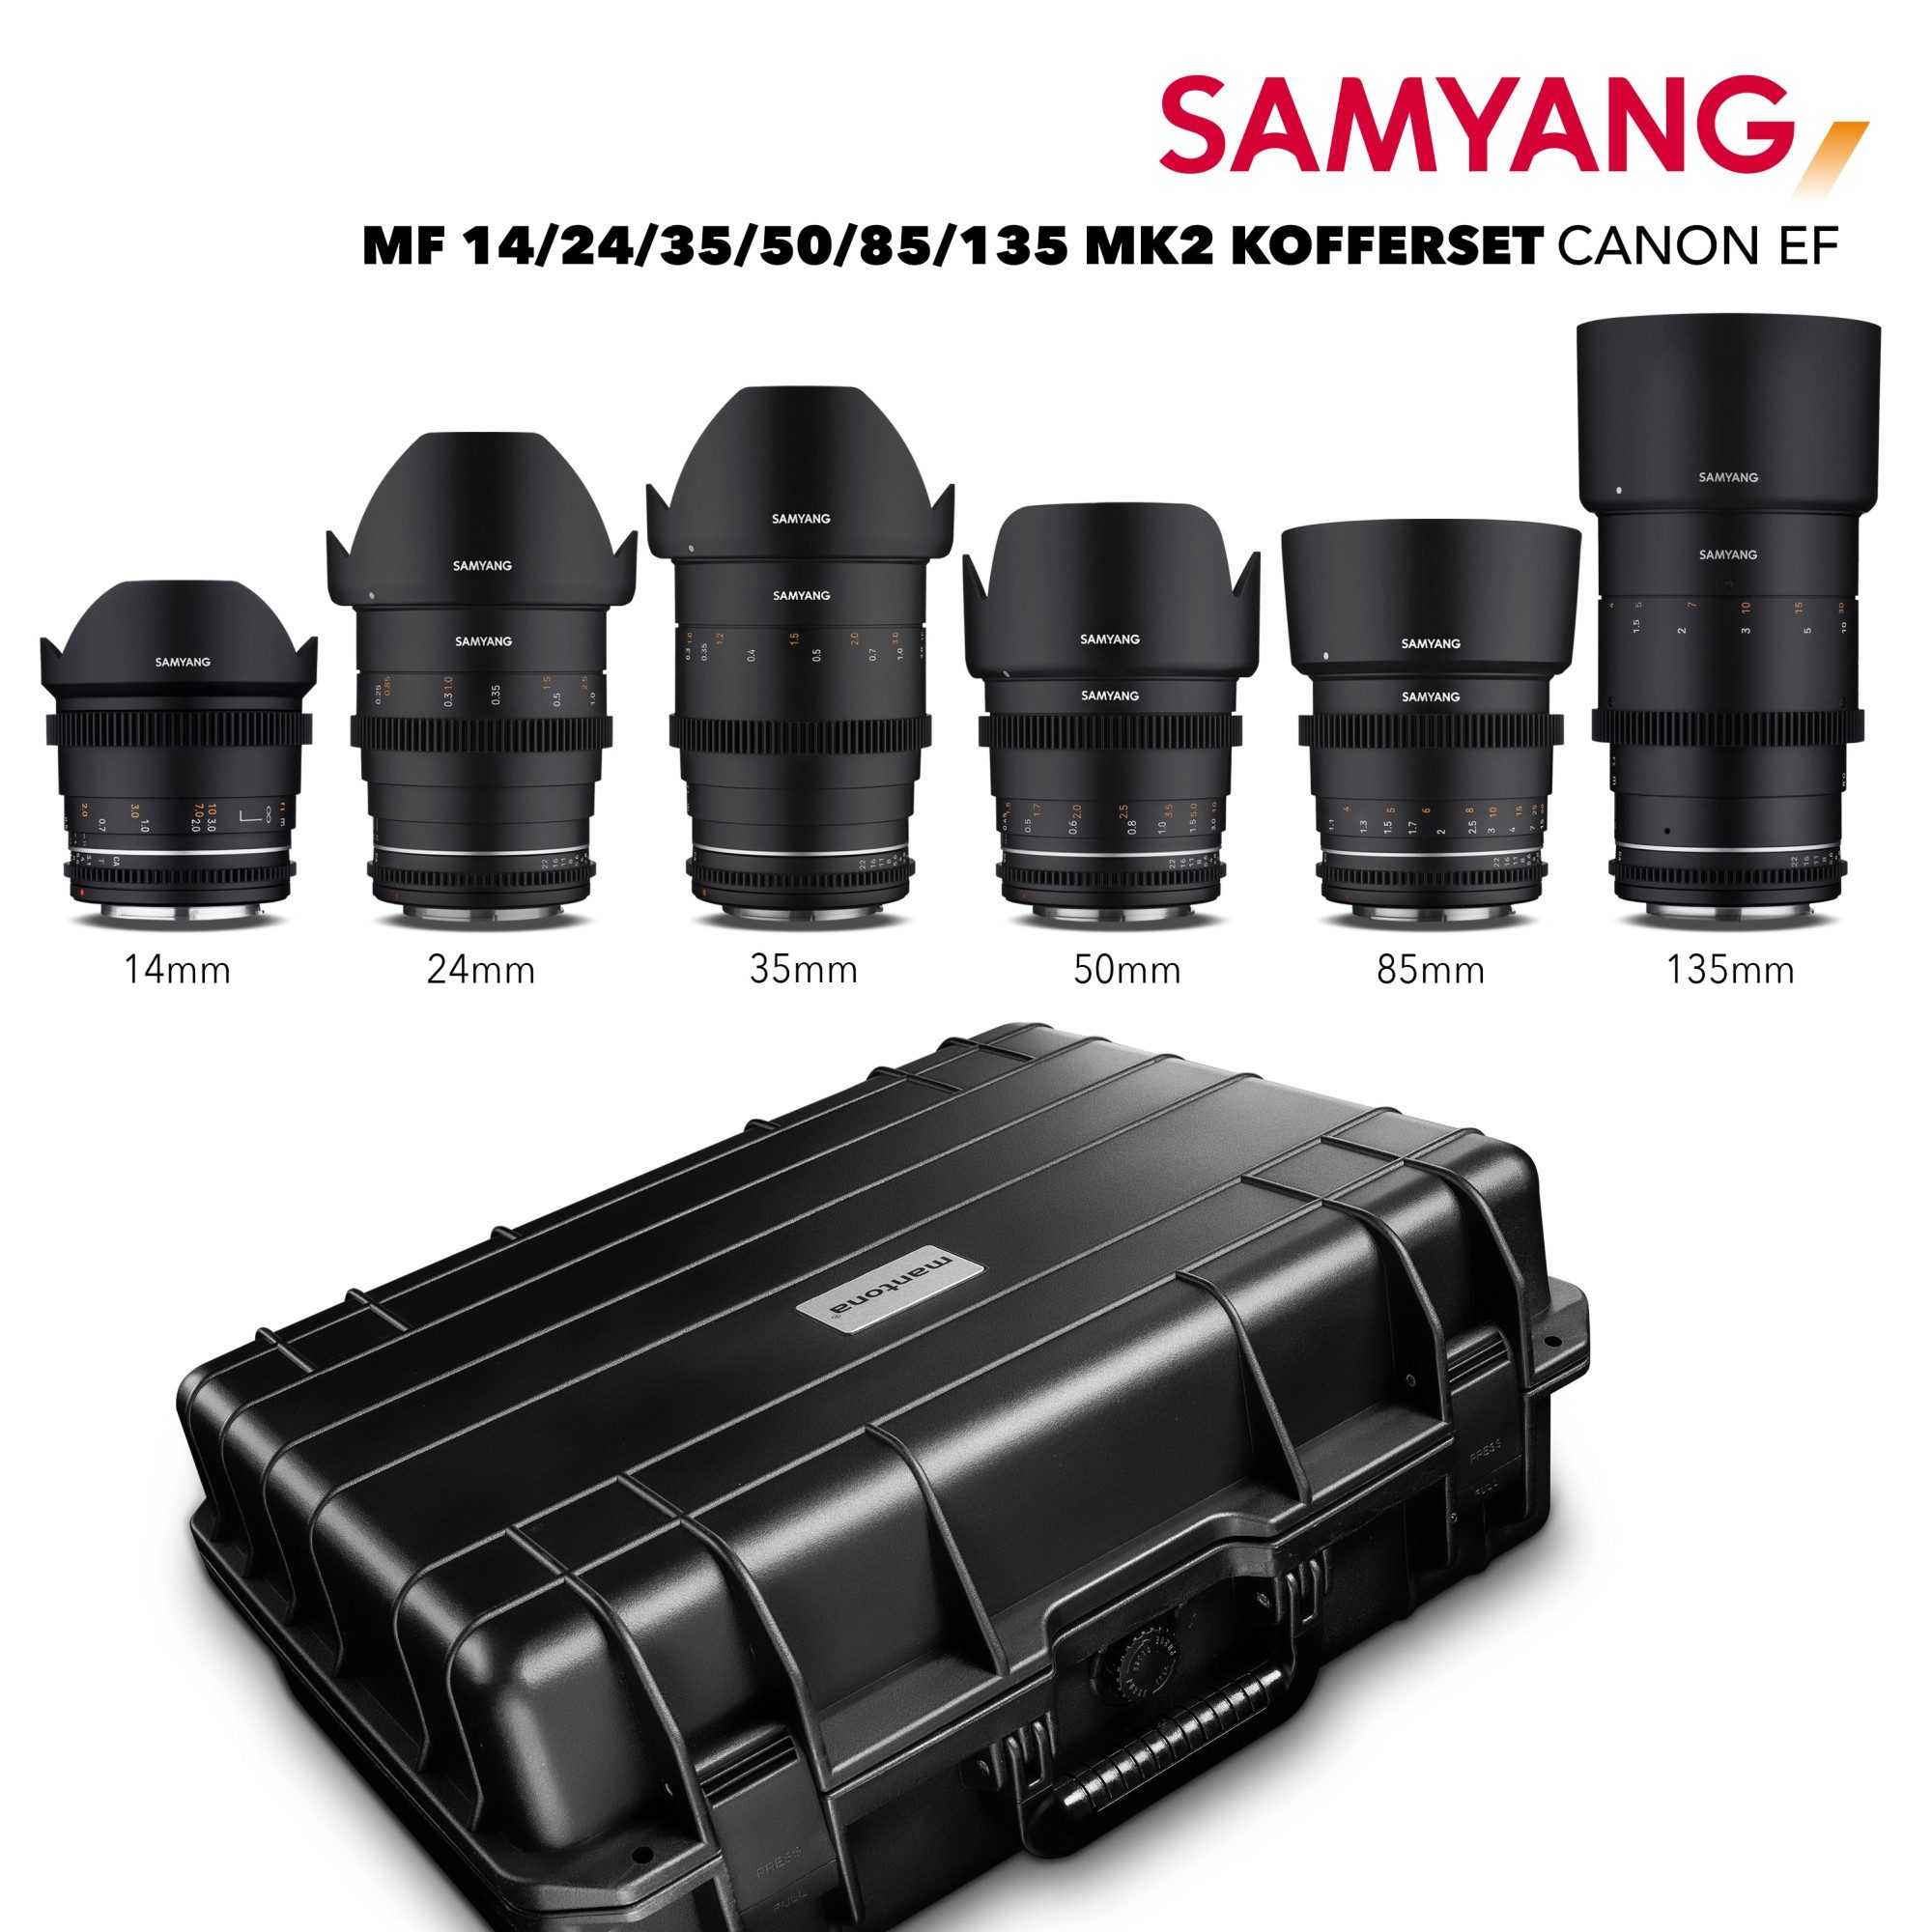 Samyang MF 14/24/35/50/85/135 MK2 VDSLR Kofferset Canon EF Objektiv